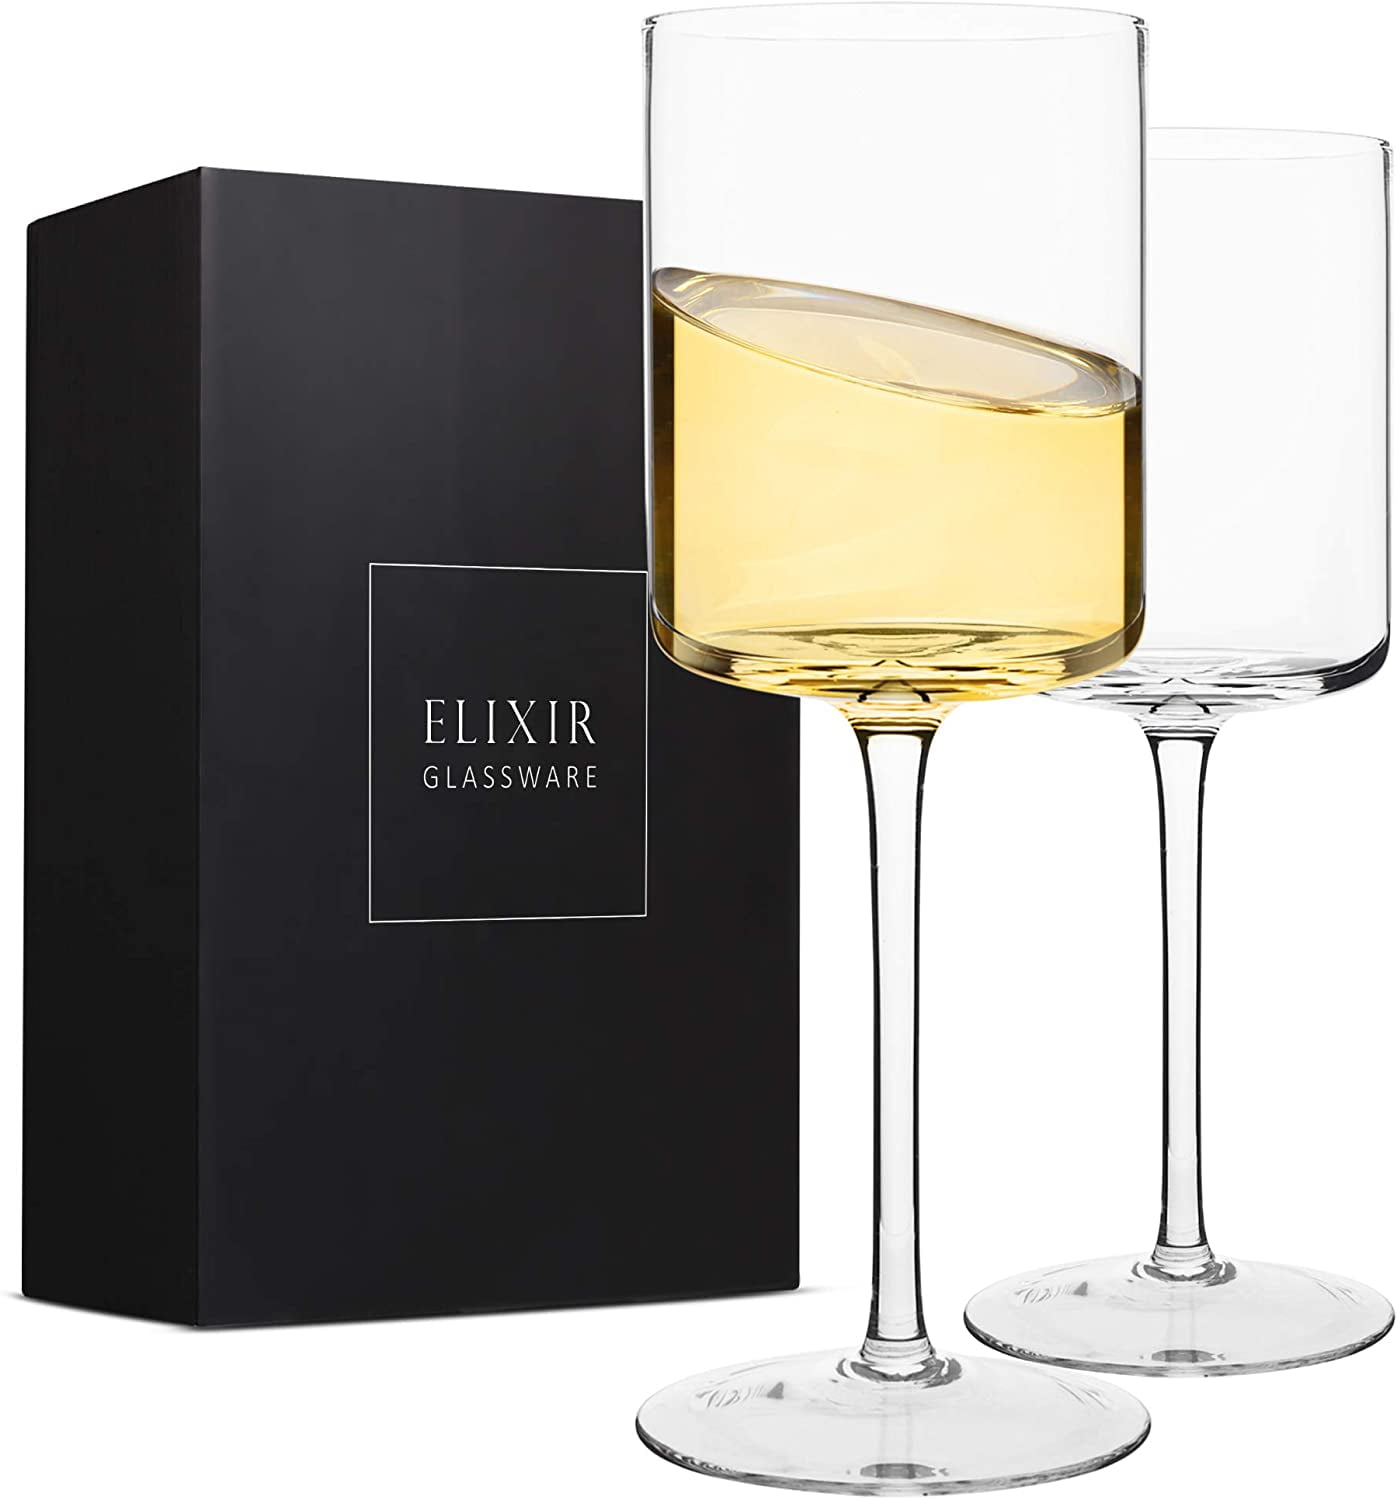 Edge Wine Glasses, Modern & Elegant Square Glass Set of 2, Large Red Wine  or White Wine Glass - Unique Gift for Women, Men, Wedding, Anniversary -  14oz, 100% Lead Free Crystal - Walmart.com